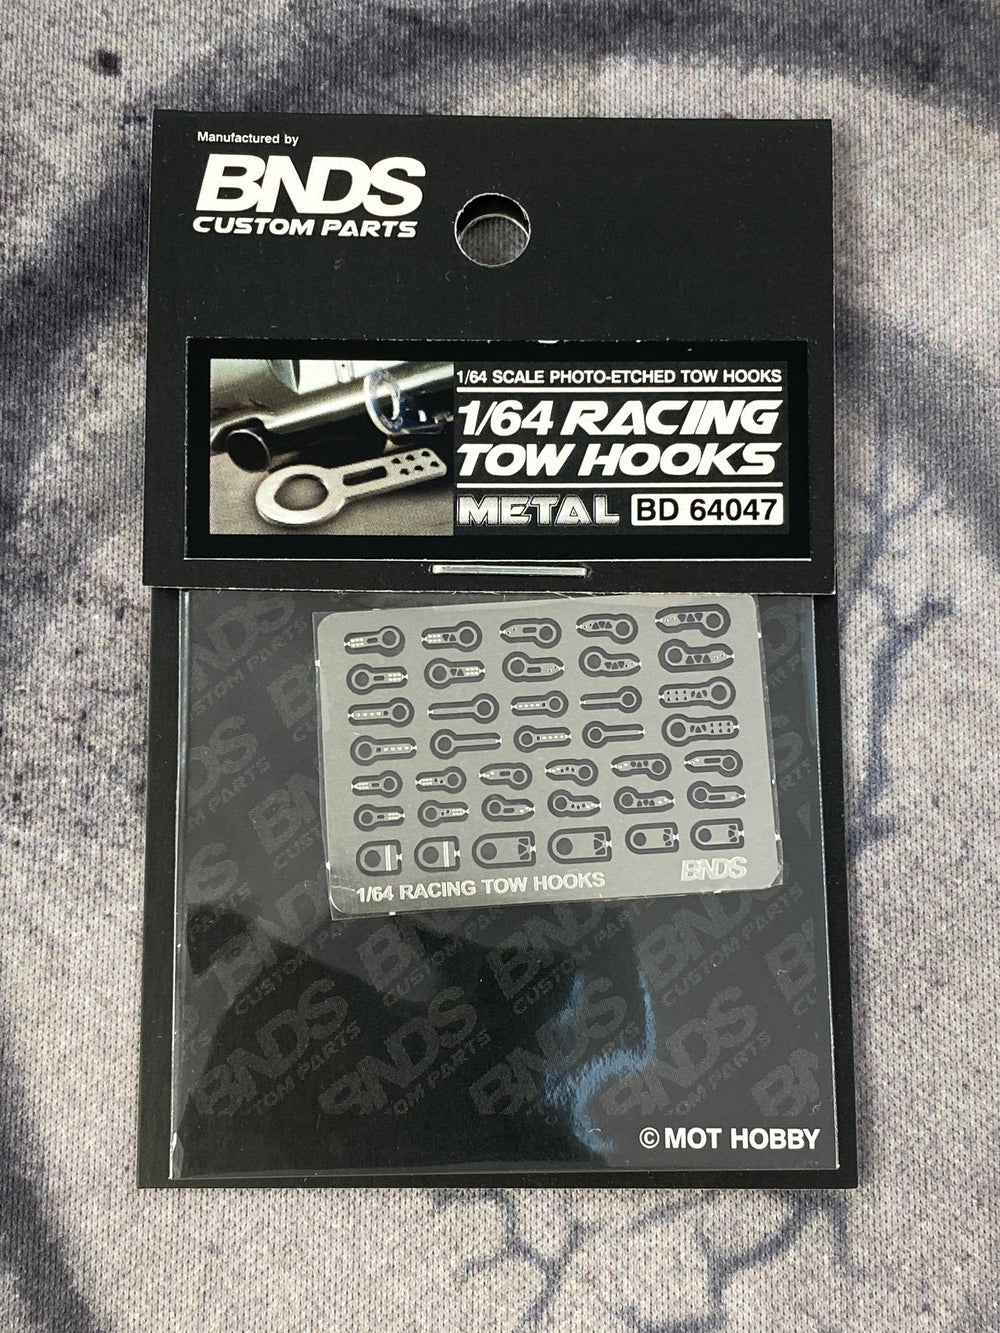 motHobby - BDNS 1:64 Custom parts - Racing Tow Hooks